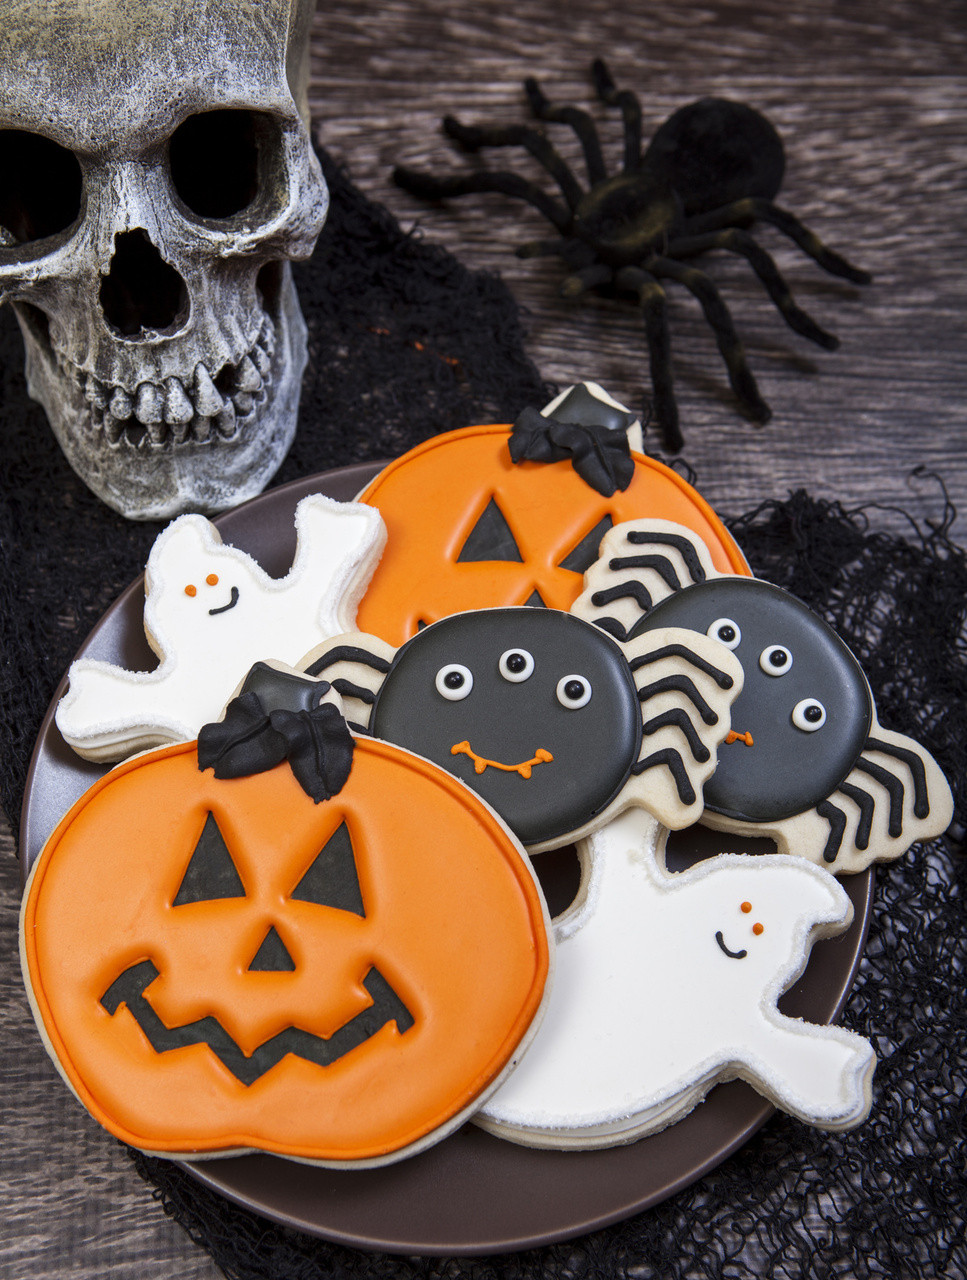 Halloween Decorated Sugar Cookies
 Spooky Cookie Halloween Cookie Decorations